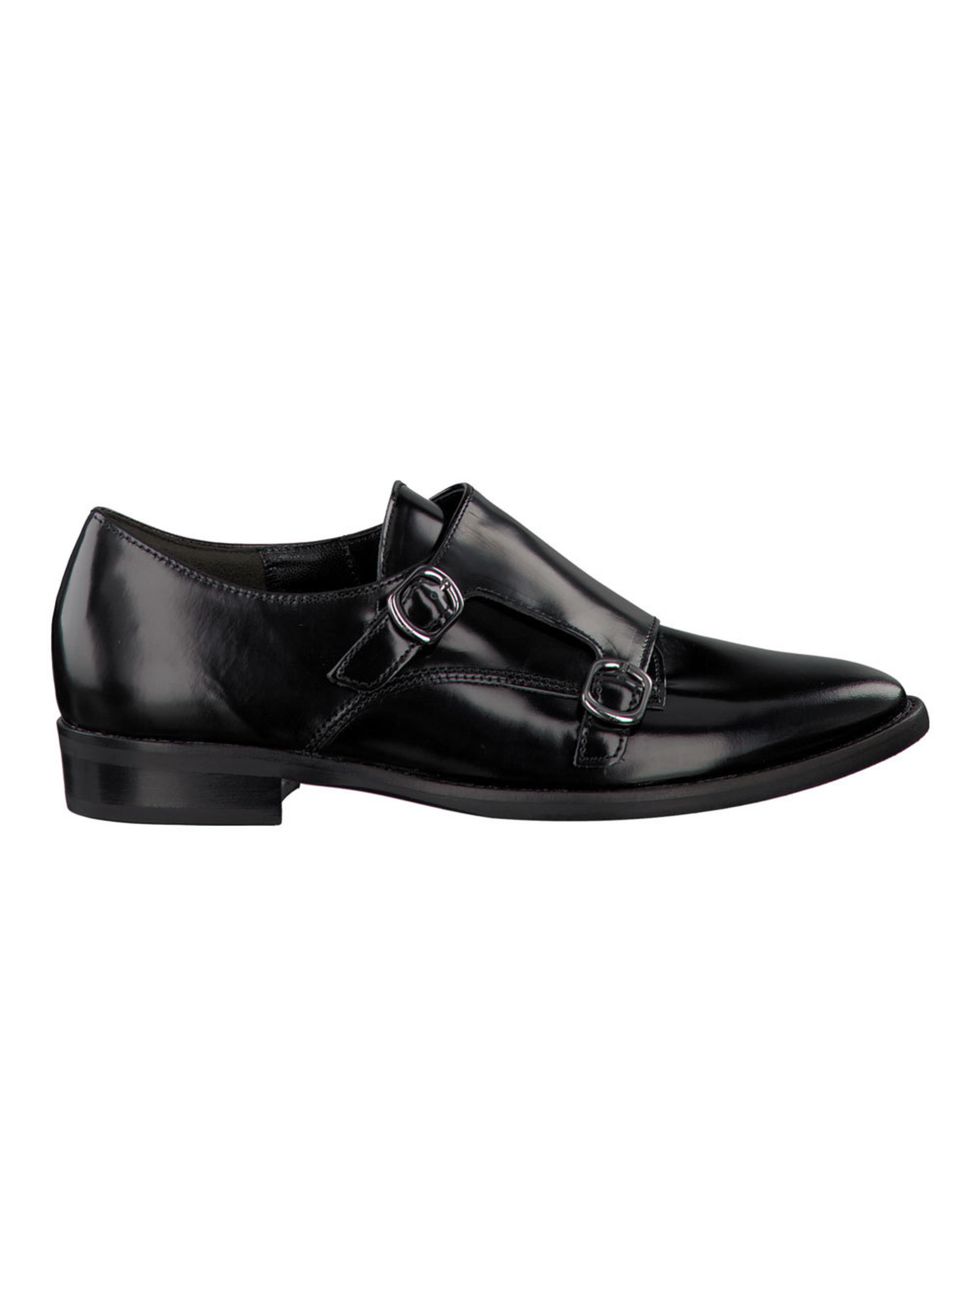 Product, Style, Dress shoe, Black, Leather, Tan, Oxford shoe, Beige, Brand, Fashion design, 